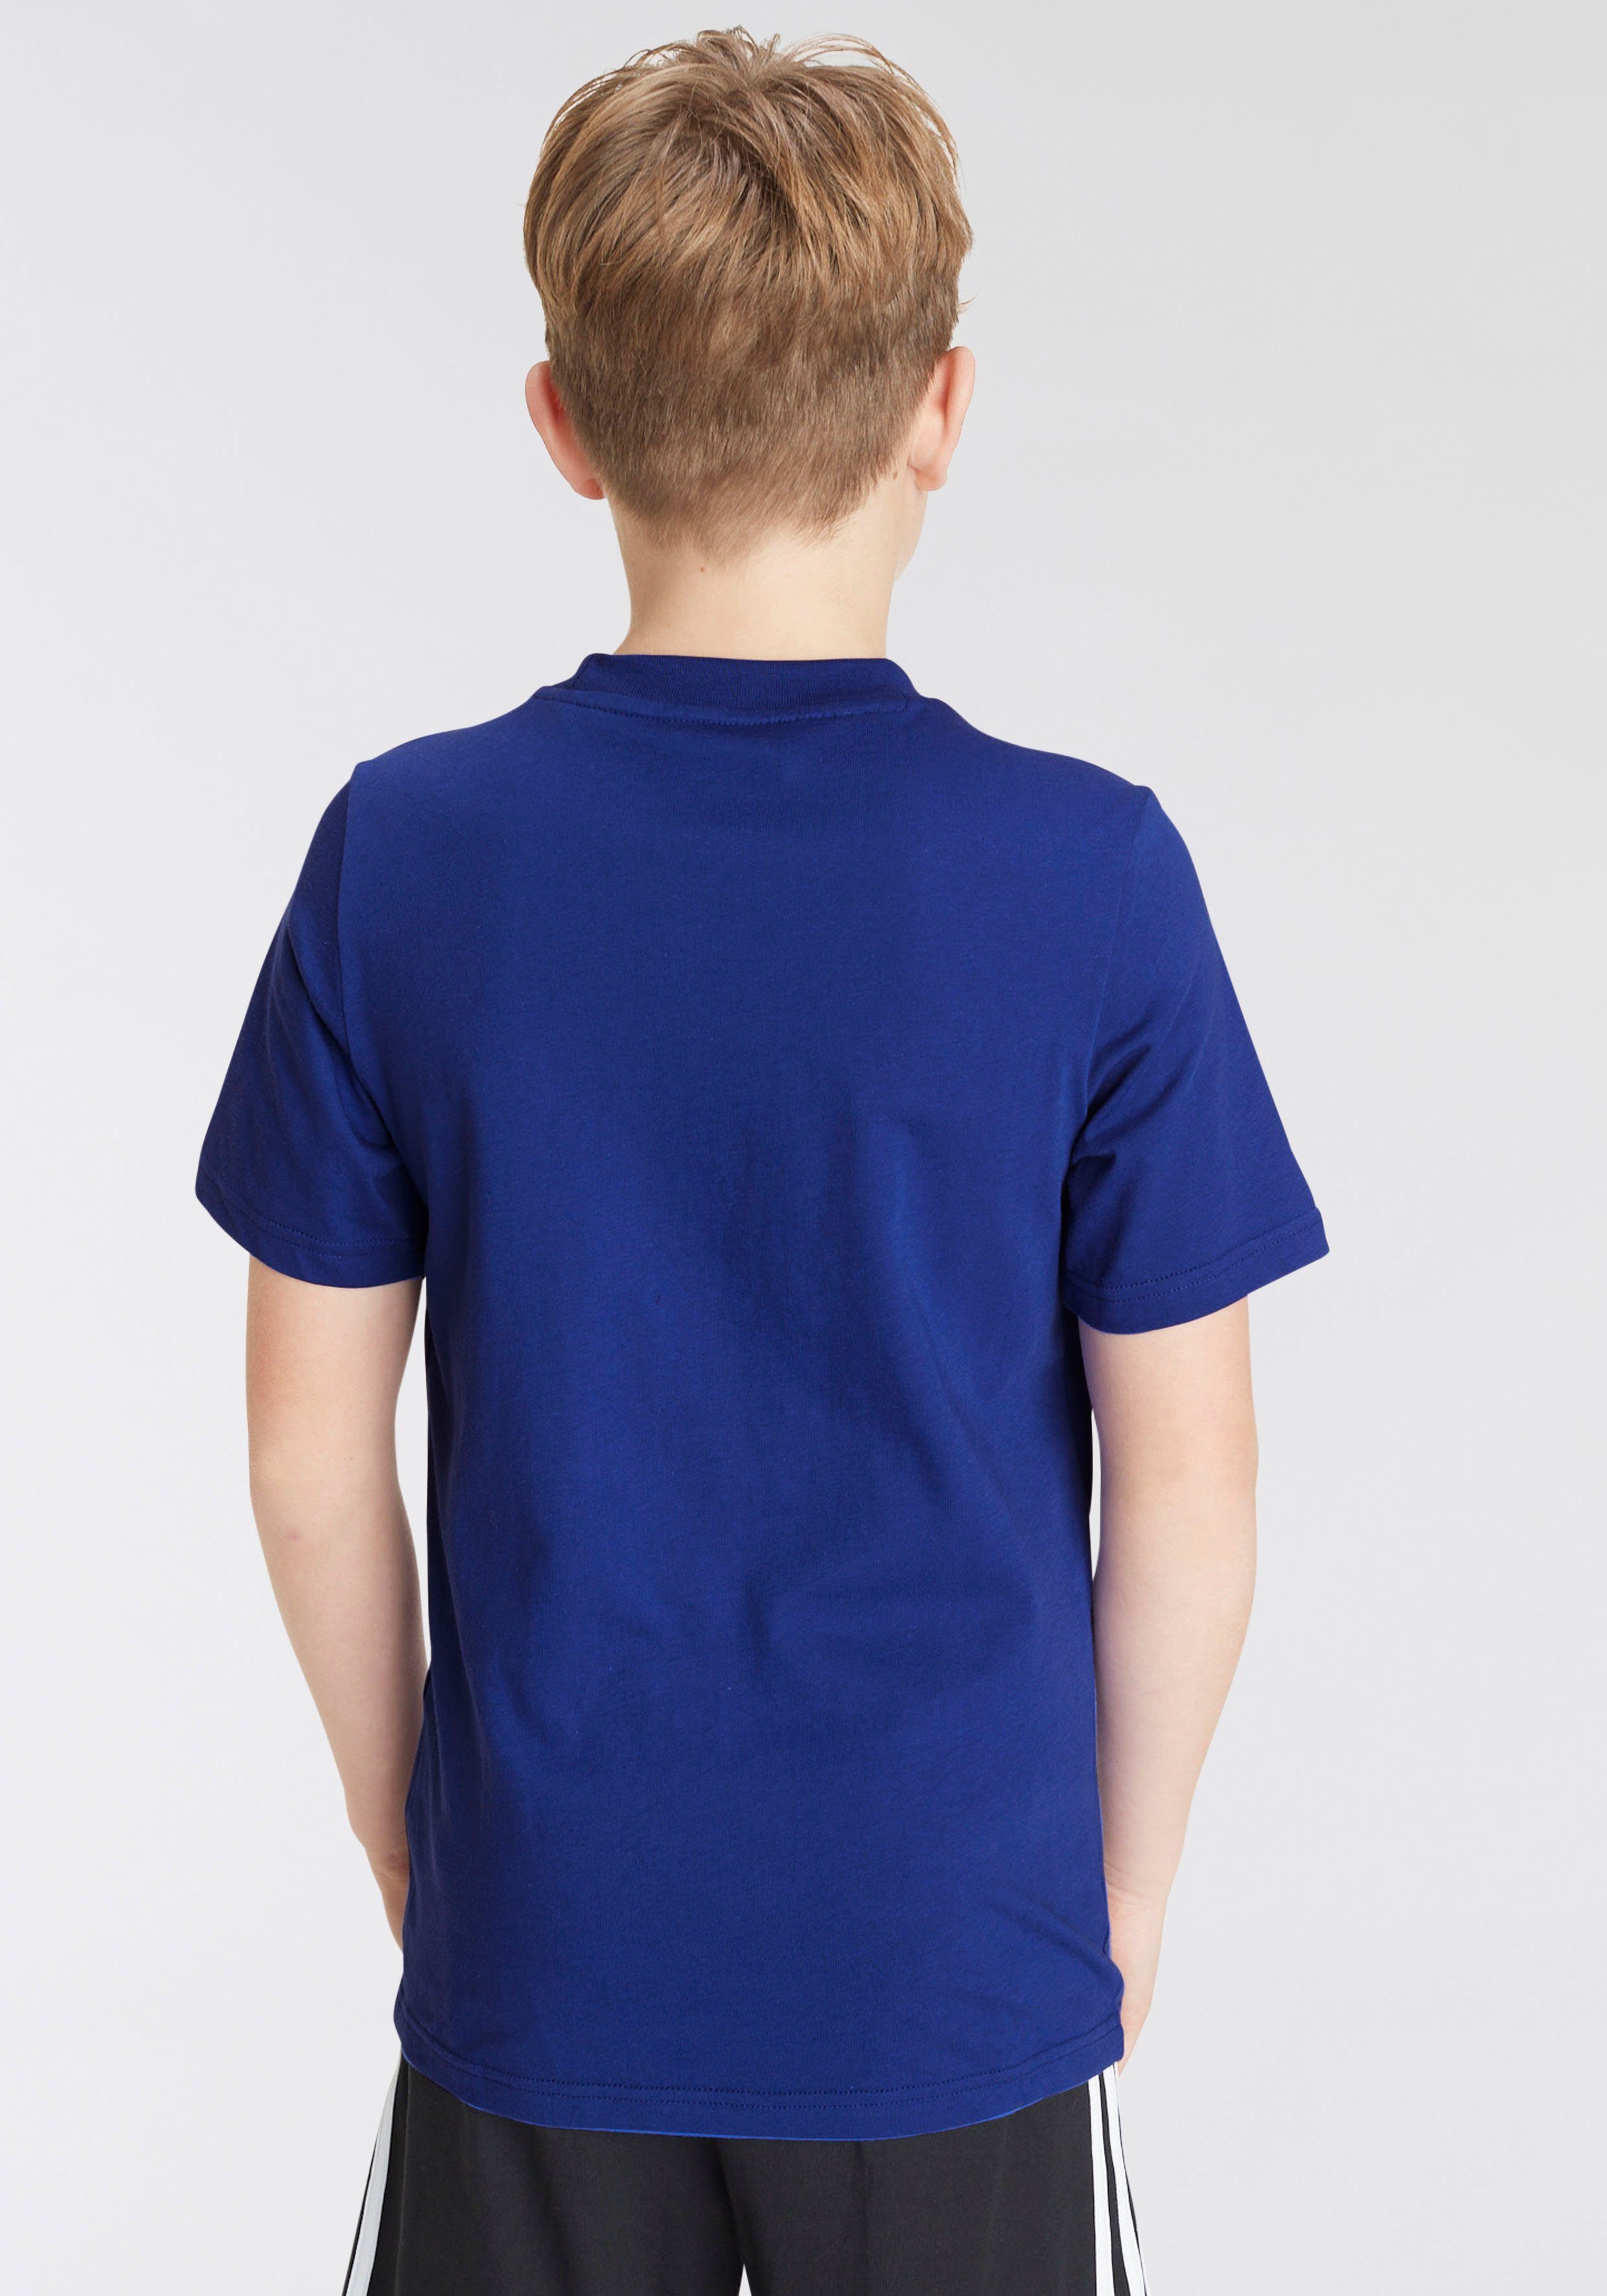 Lucid COTTON Sportswear adidas SMALL Blue T-Shirt ESSENTIALS White LOGO / Semi